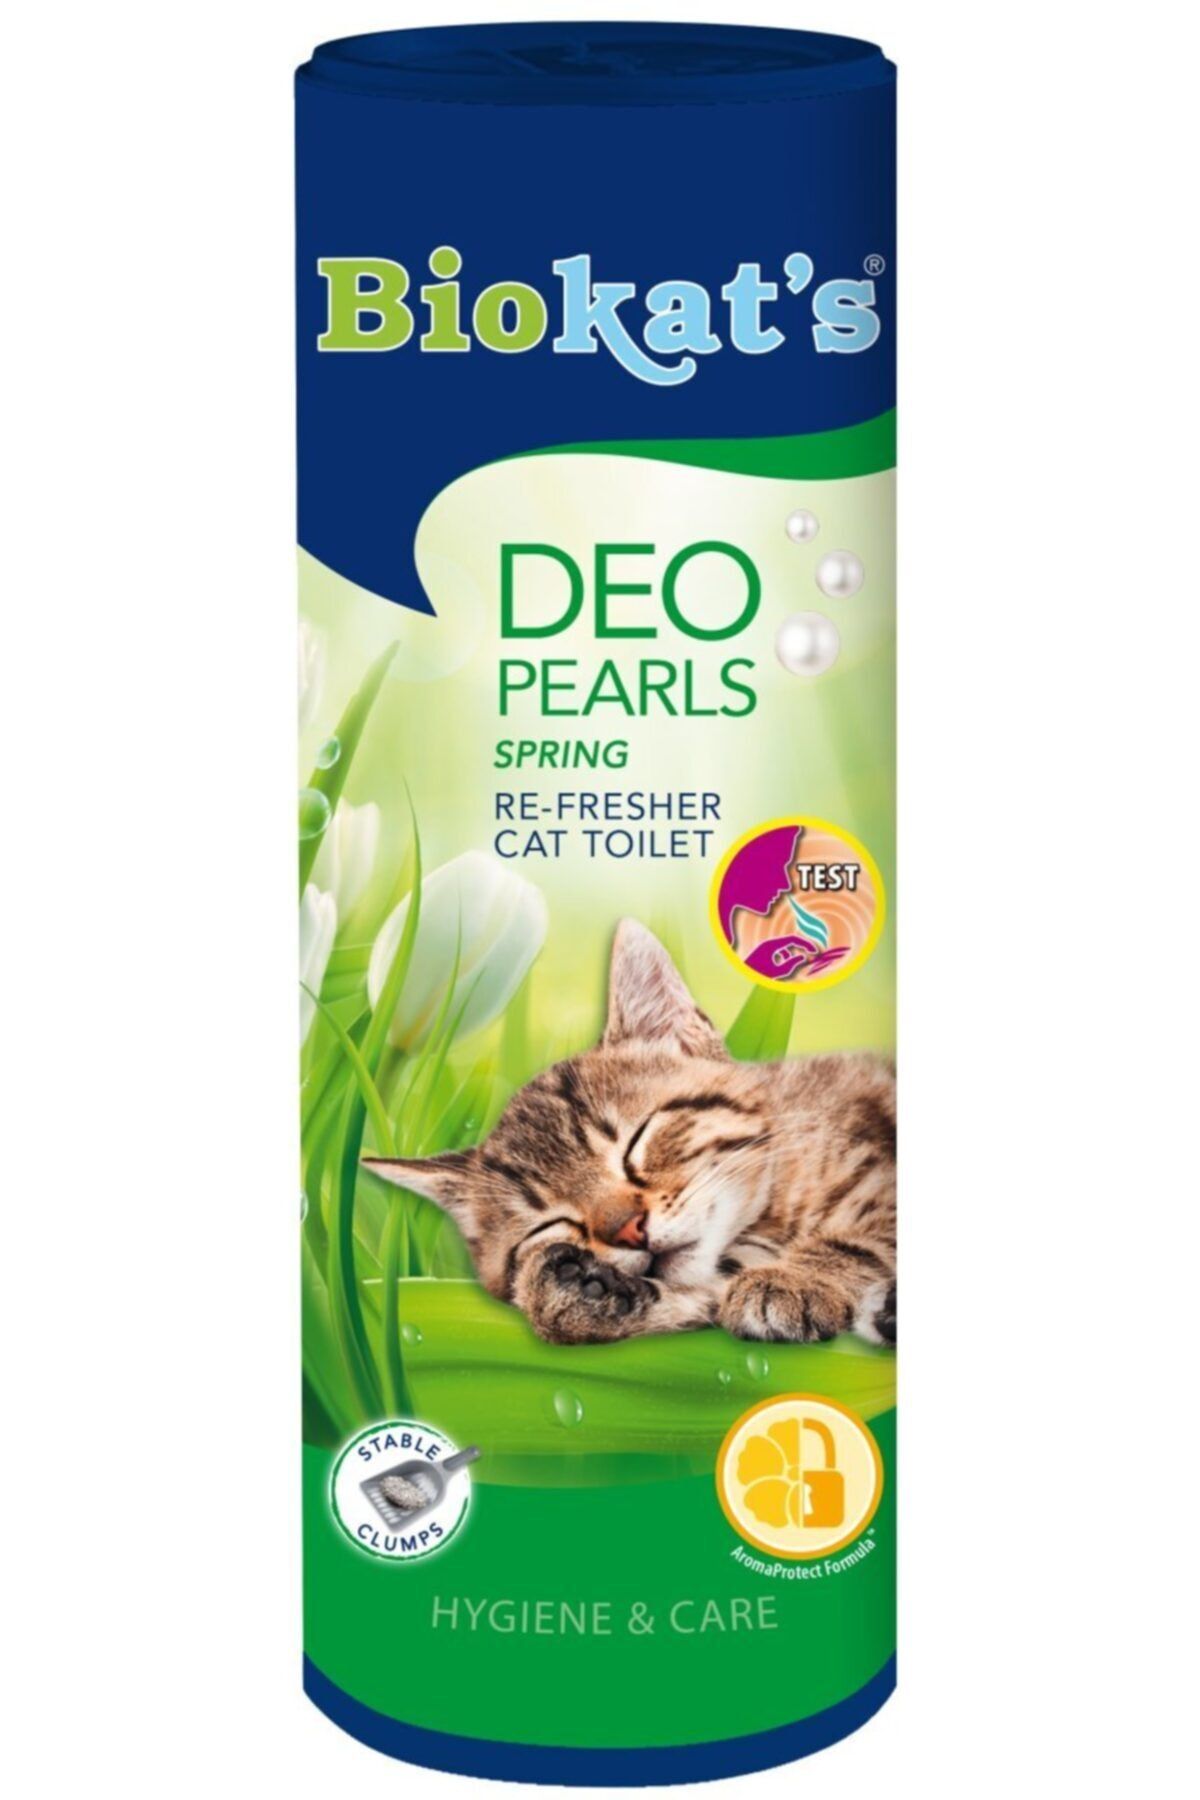 Biokat's Deo Pearls Kedi Kumu Parfümü Bahar Esanslı 700gr